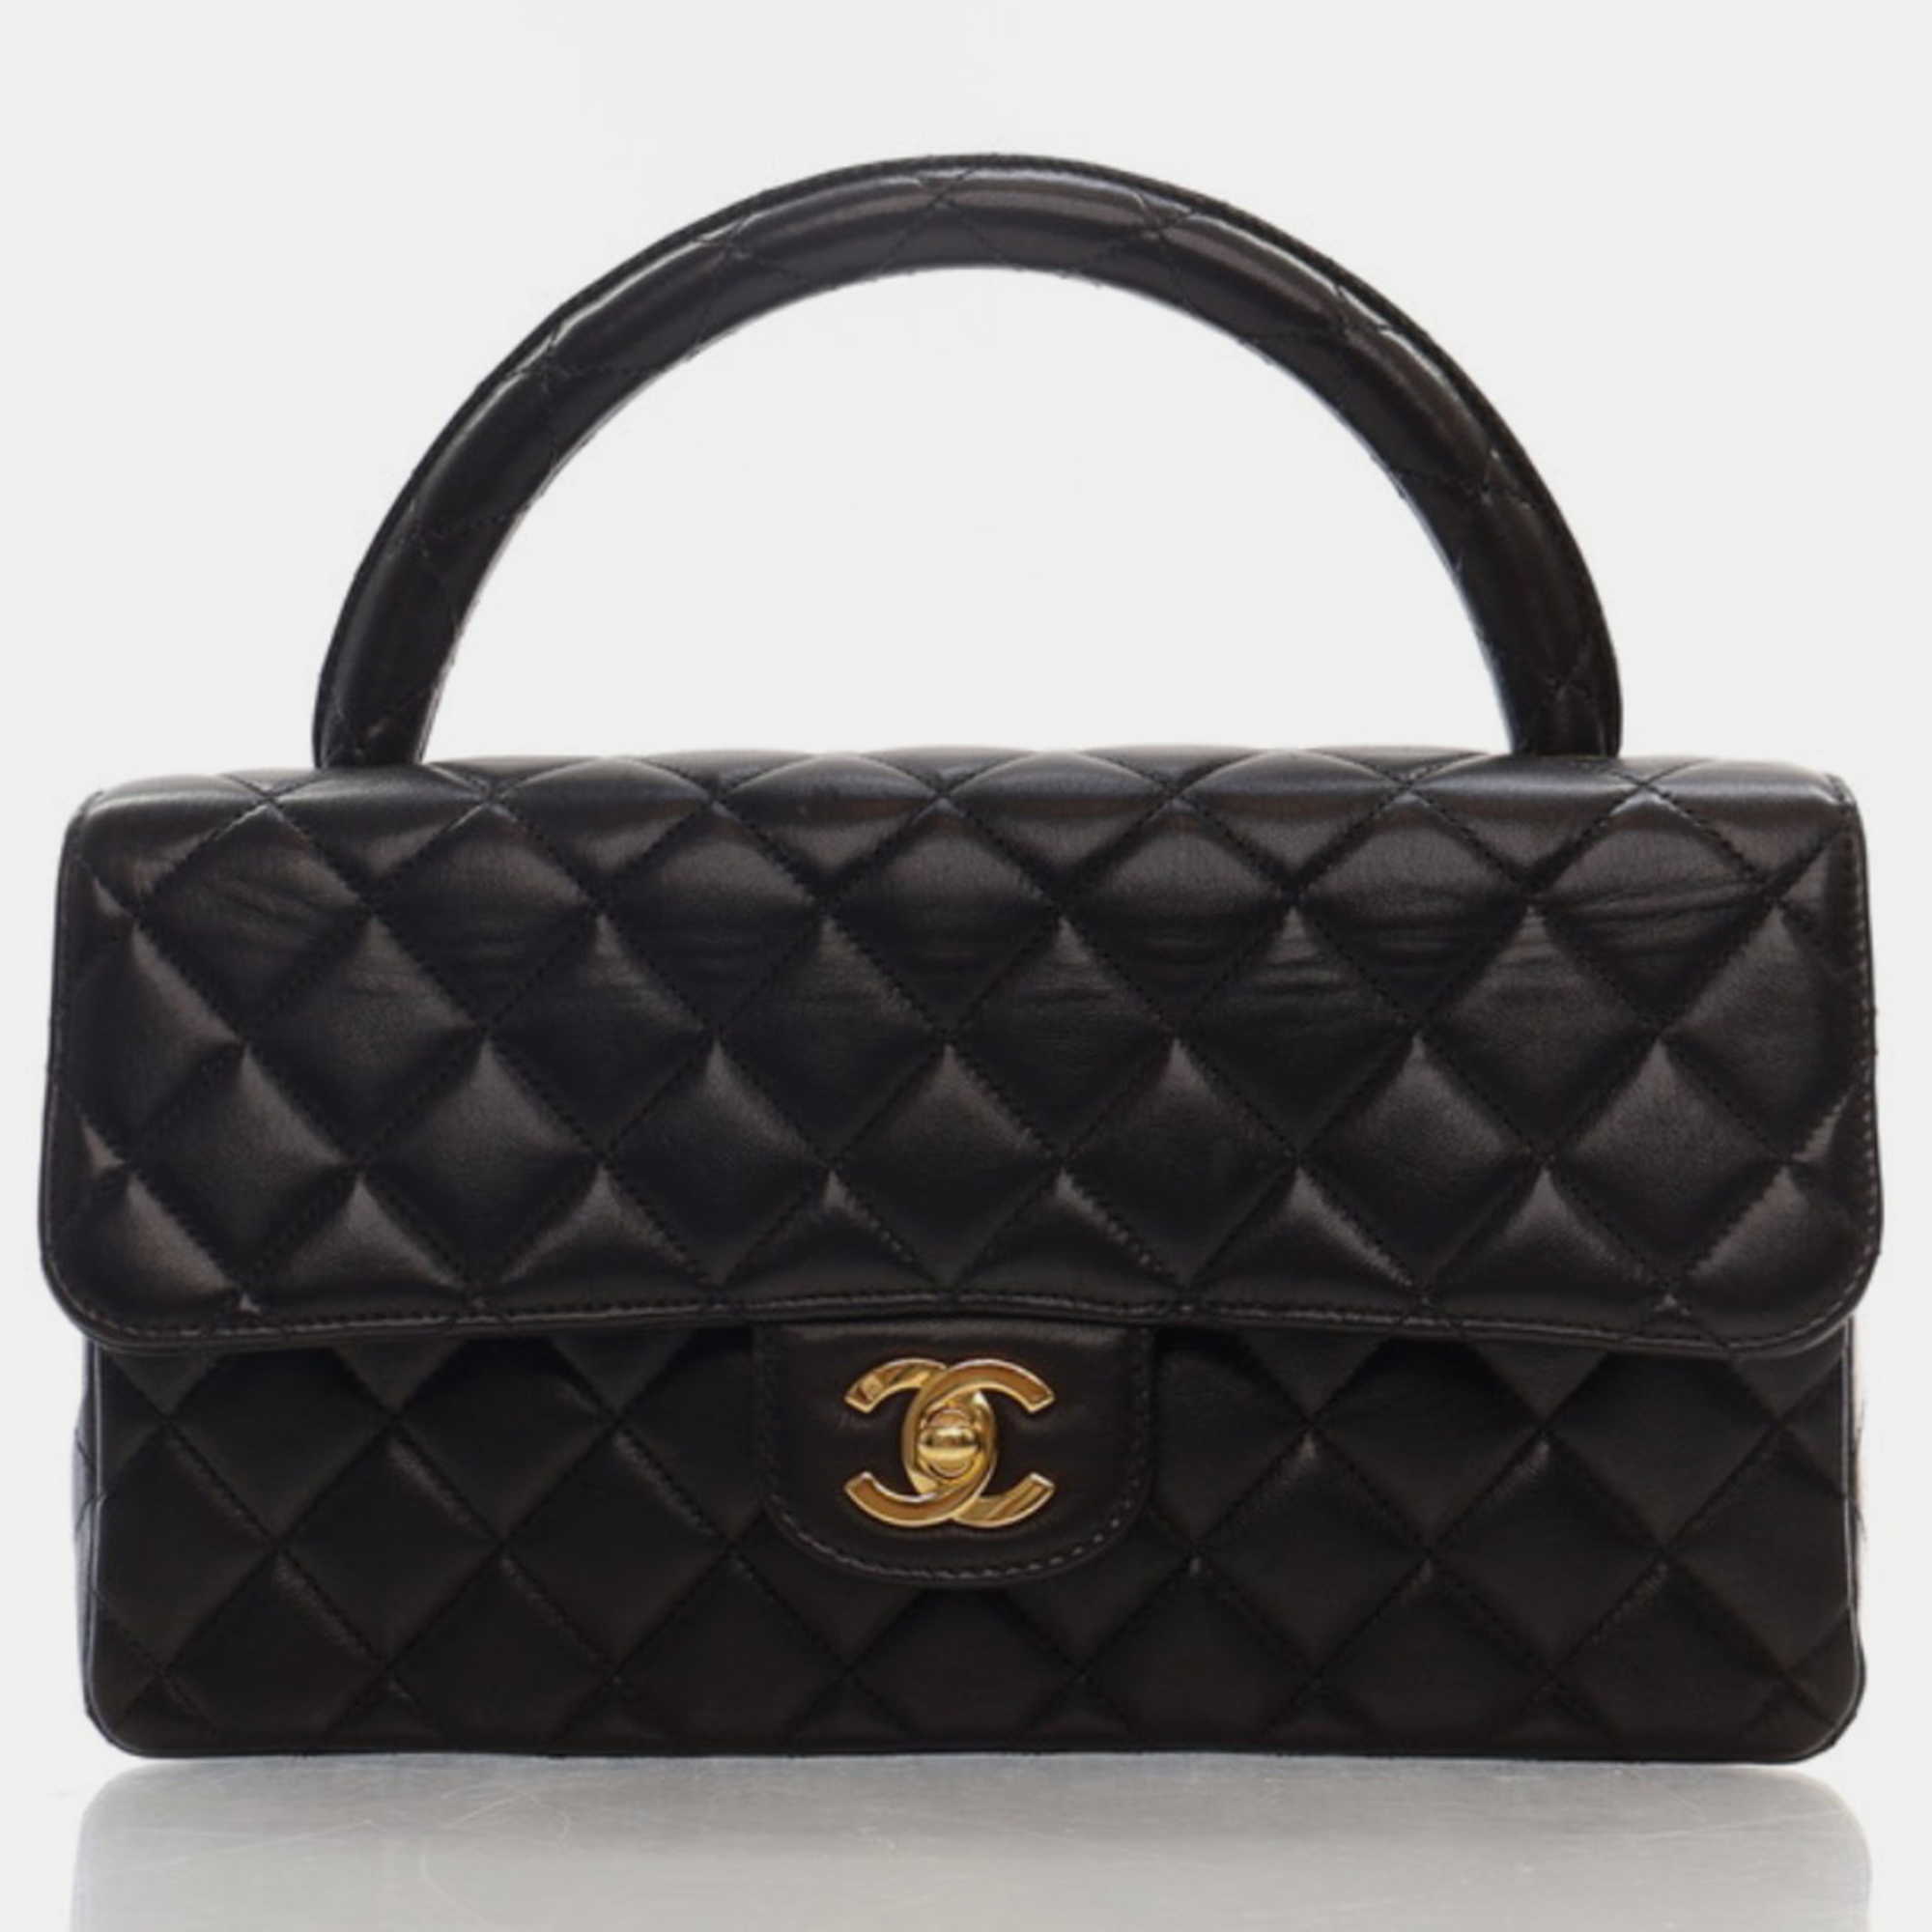 Chanel black lambskin medium kelly flap bag